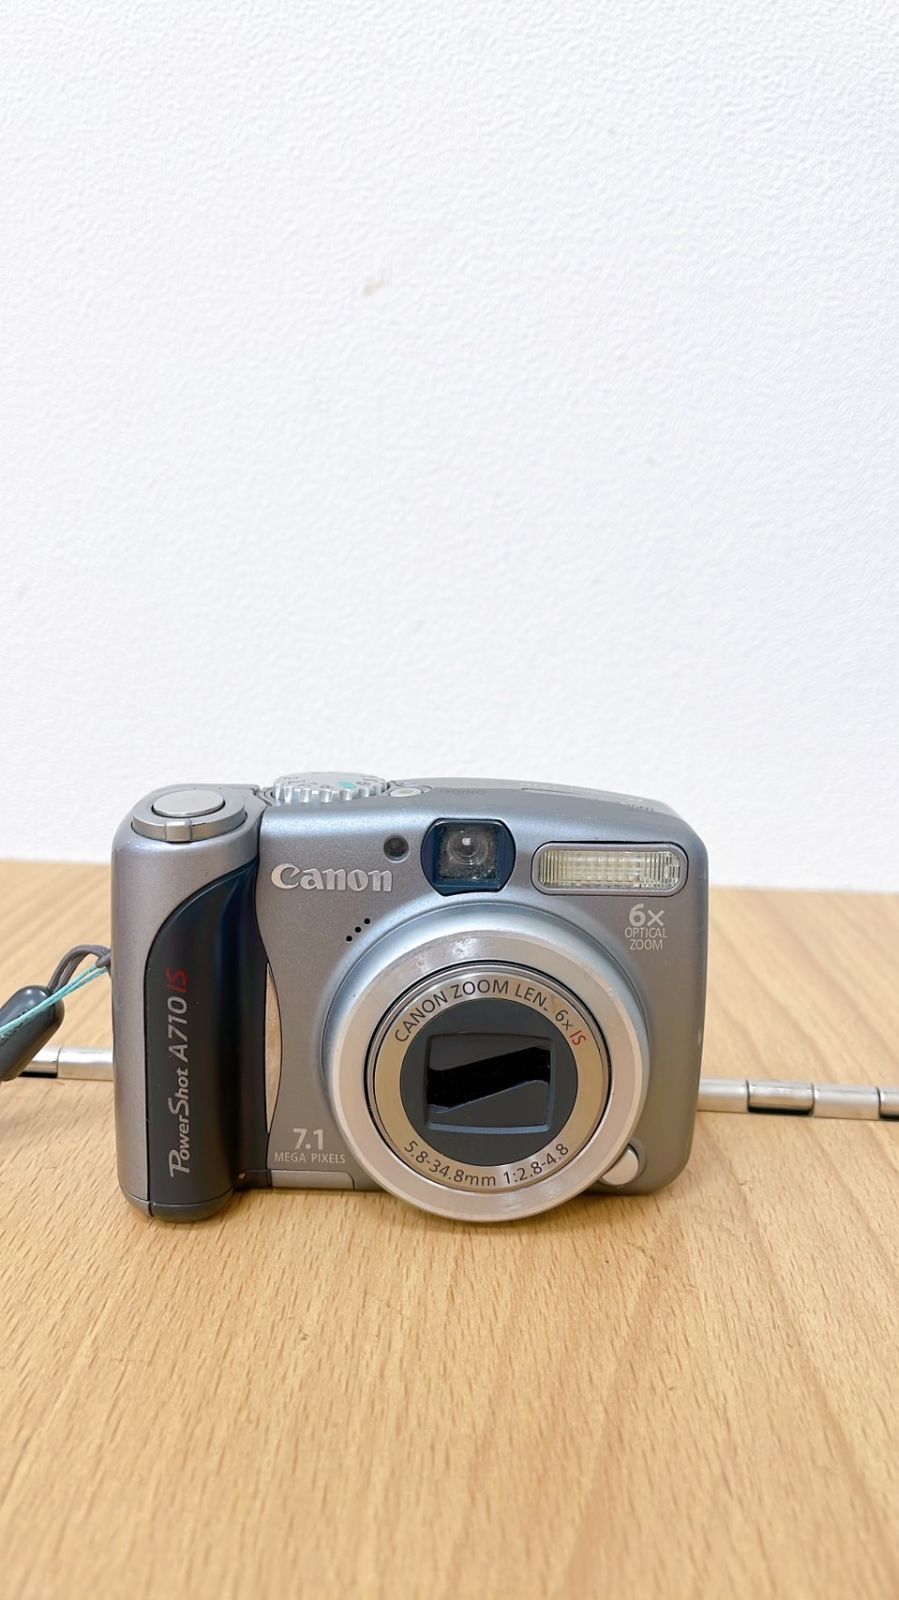 Canon PowerShot A710 IS デシカメ塚カメラ - デジタルカメラ